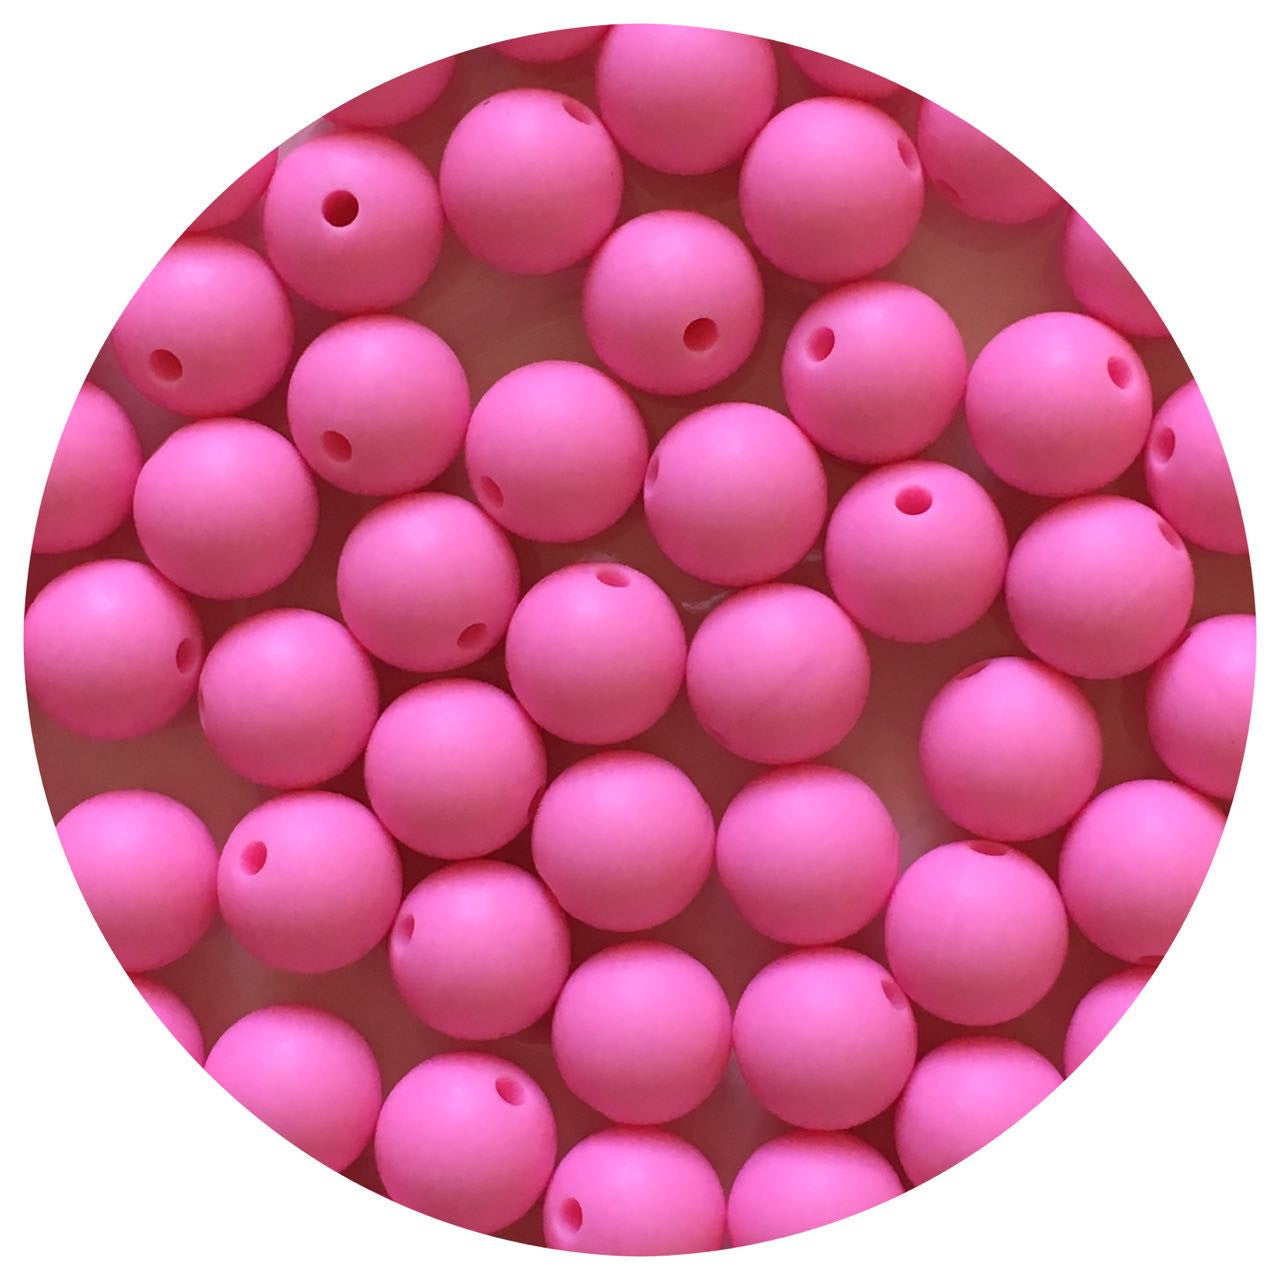 Bubblegum Pink - 12mm Round Silicone Beads - 10 beads